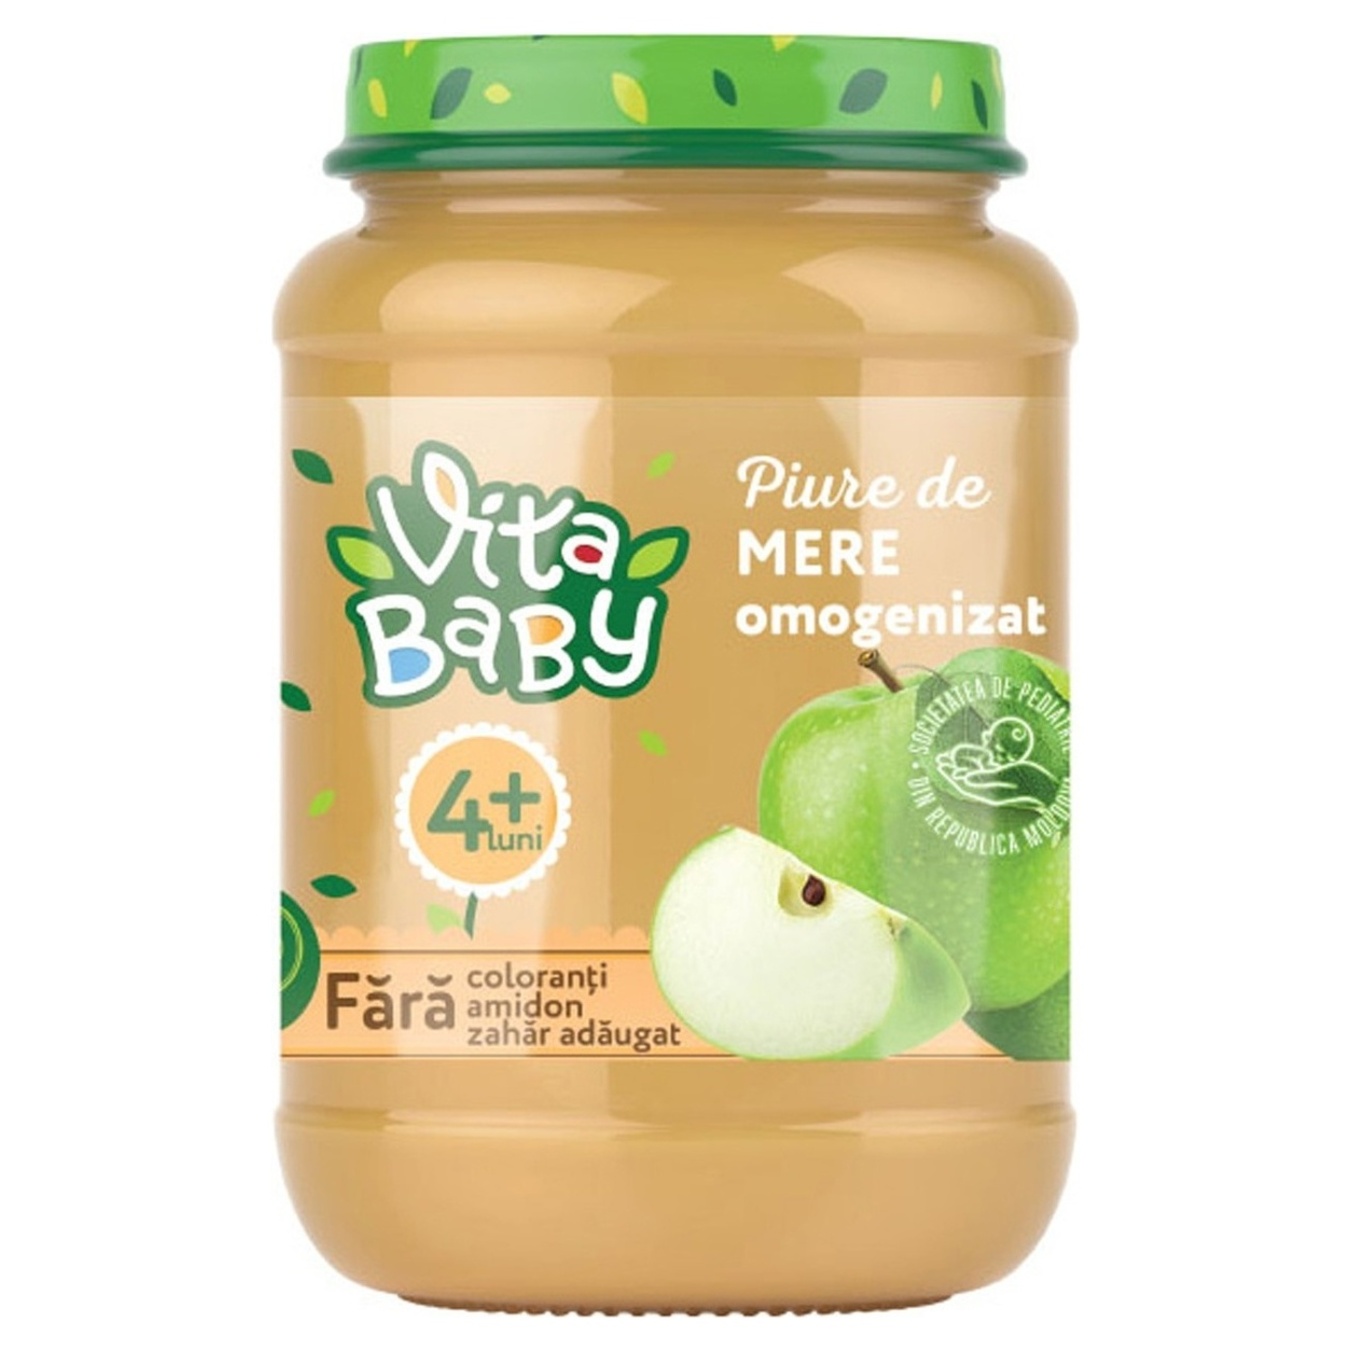 Vita Baby apple puree without added sugar 180g